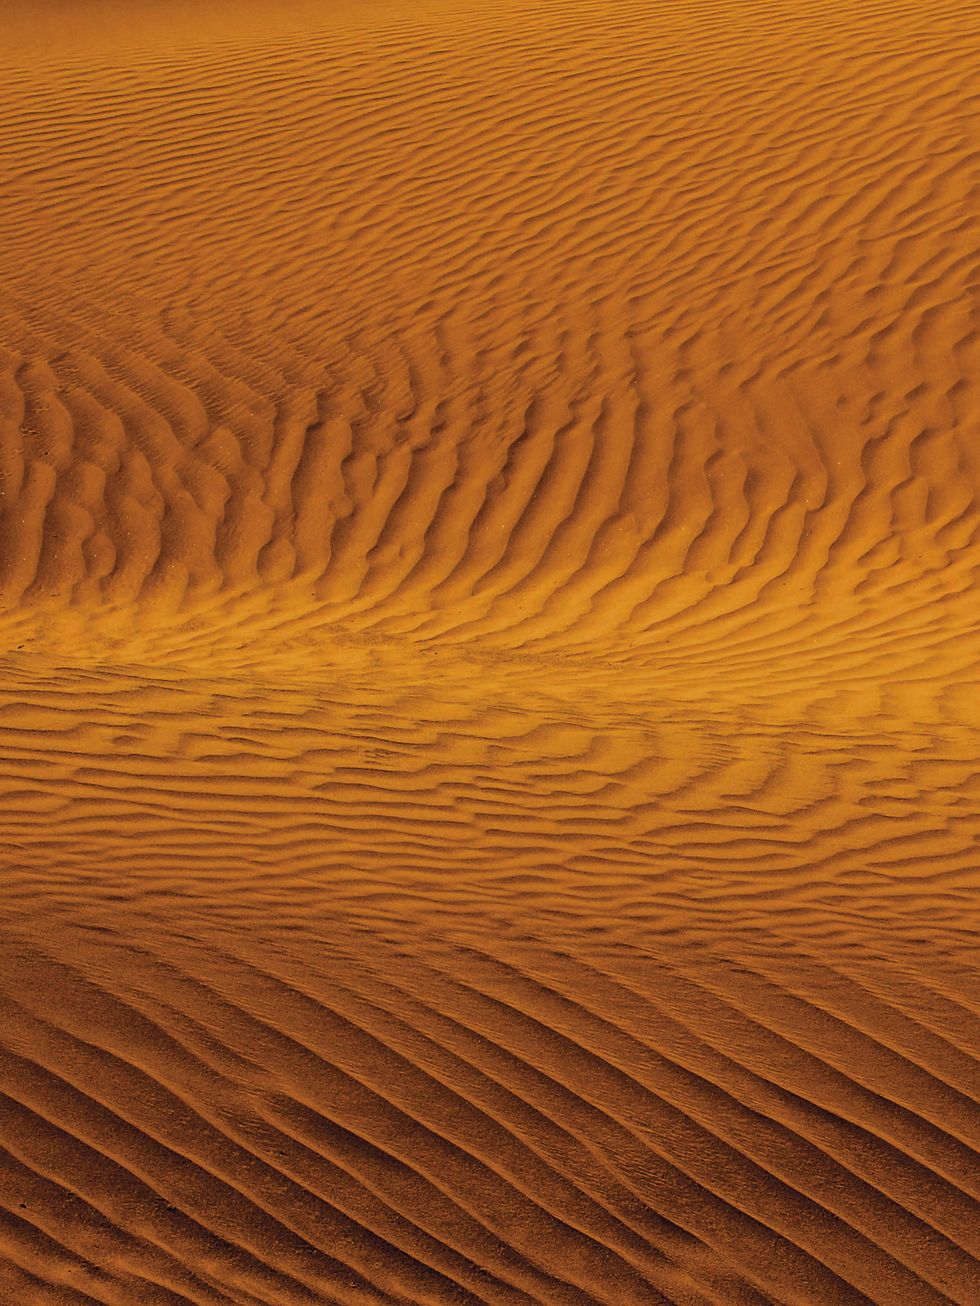 Desert, Erg, Natural environment, Sand, Orange, Dune, Aeolian landform, Yellow, Brown, Sahara, 